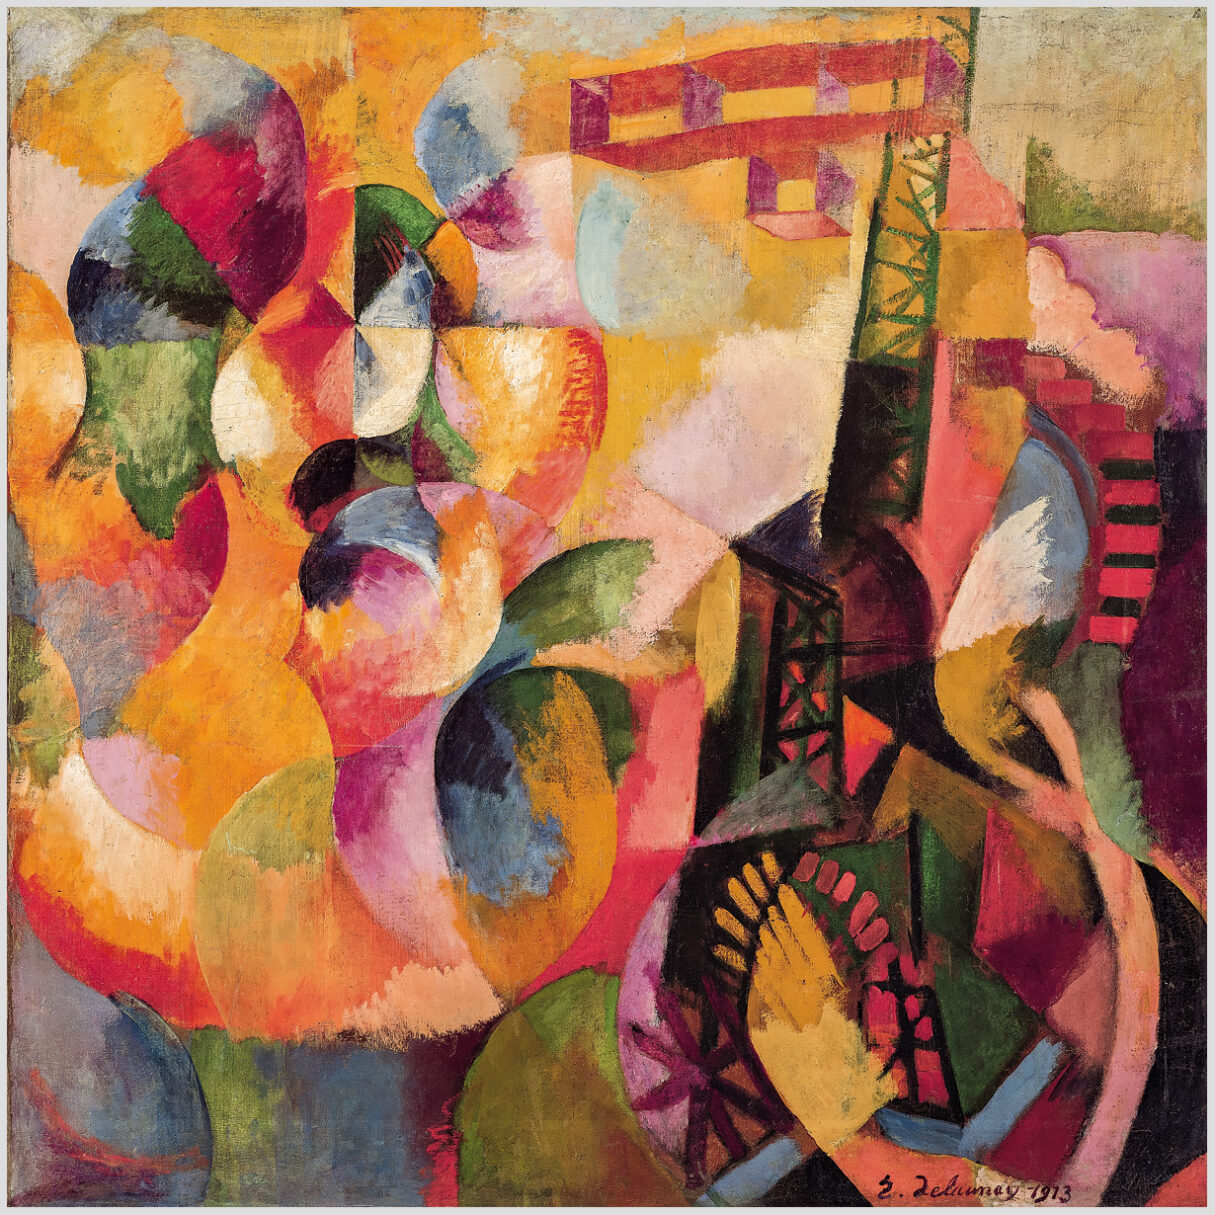 Akustikbild mit einem Motiv von Robert Delaunay mit dem Titel "Sonne, Turm, Flugzeug"